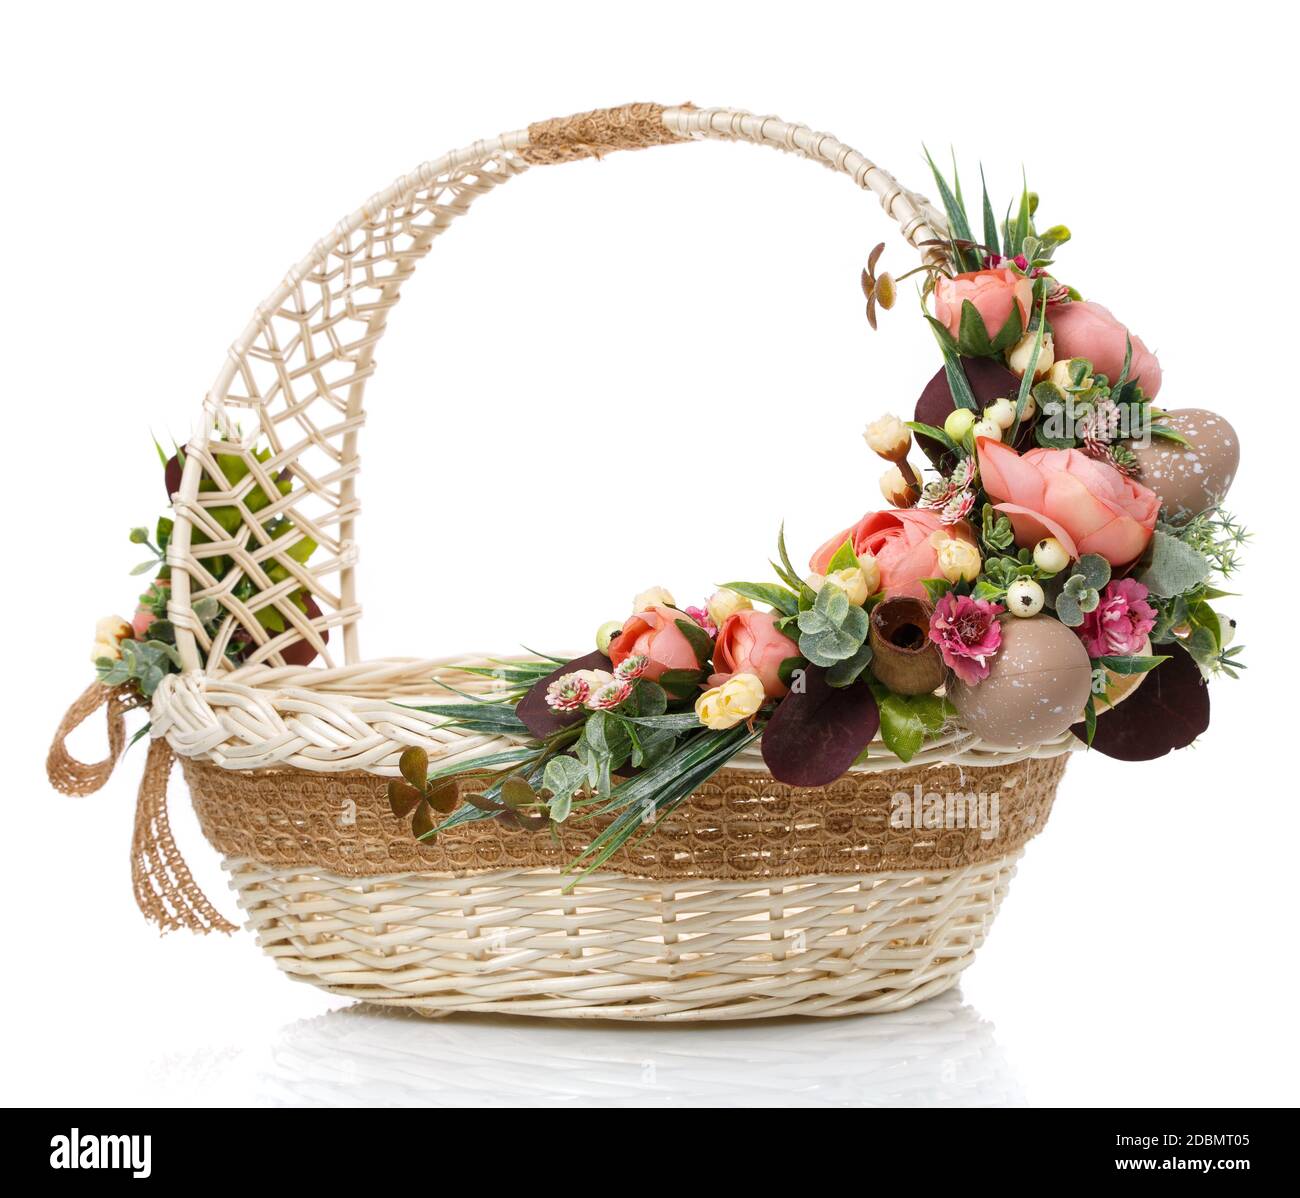 Las cestas de mimbre están decoradas con un arreglo floral para Semana  Santa. Sobre un fondo blanco. Vista lateral Fotografía de stock - Alamy